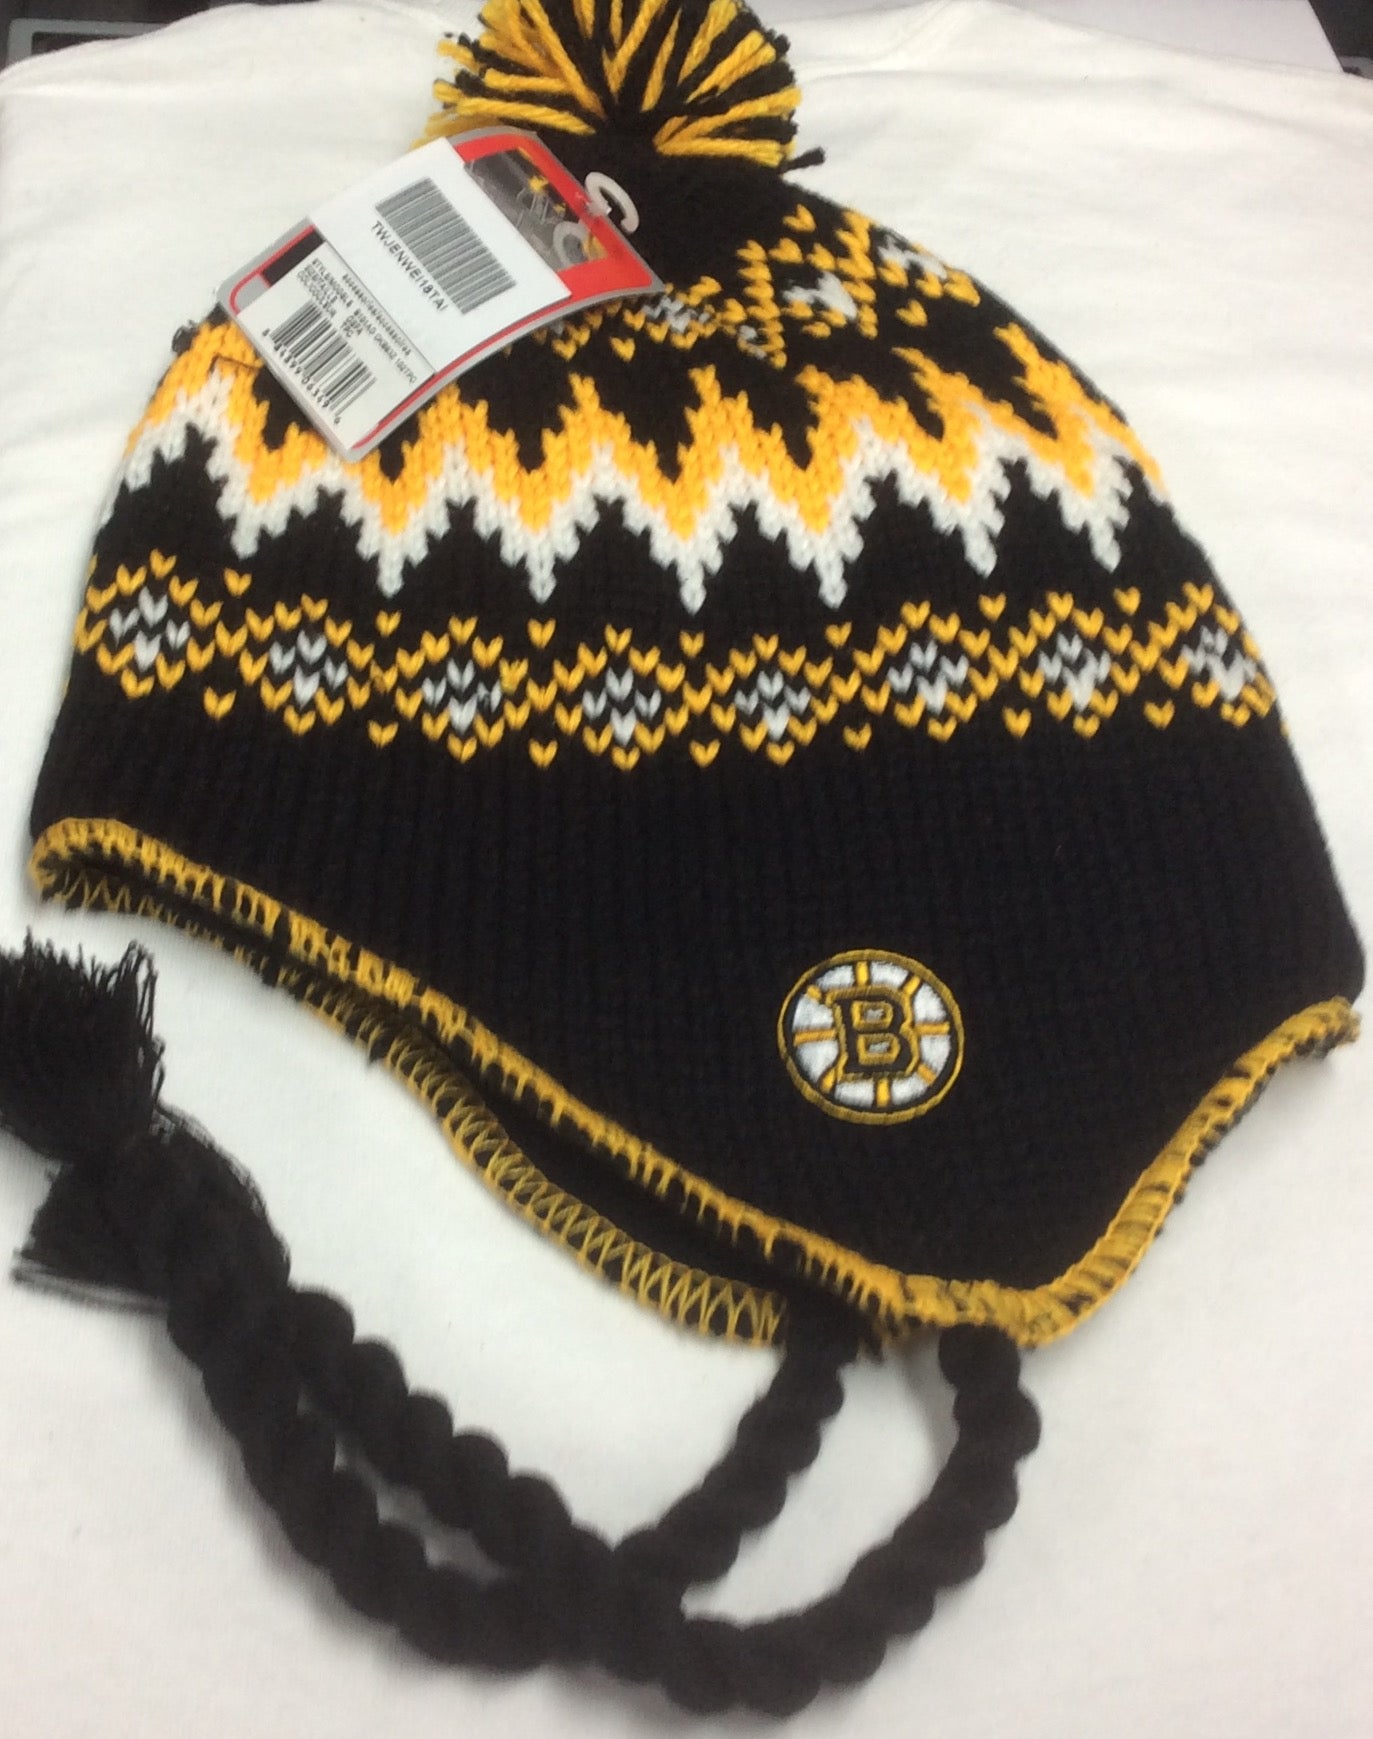 Boston Bruins Youth Jacquard Tassel Knit Hat with Pom - Black